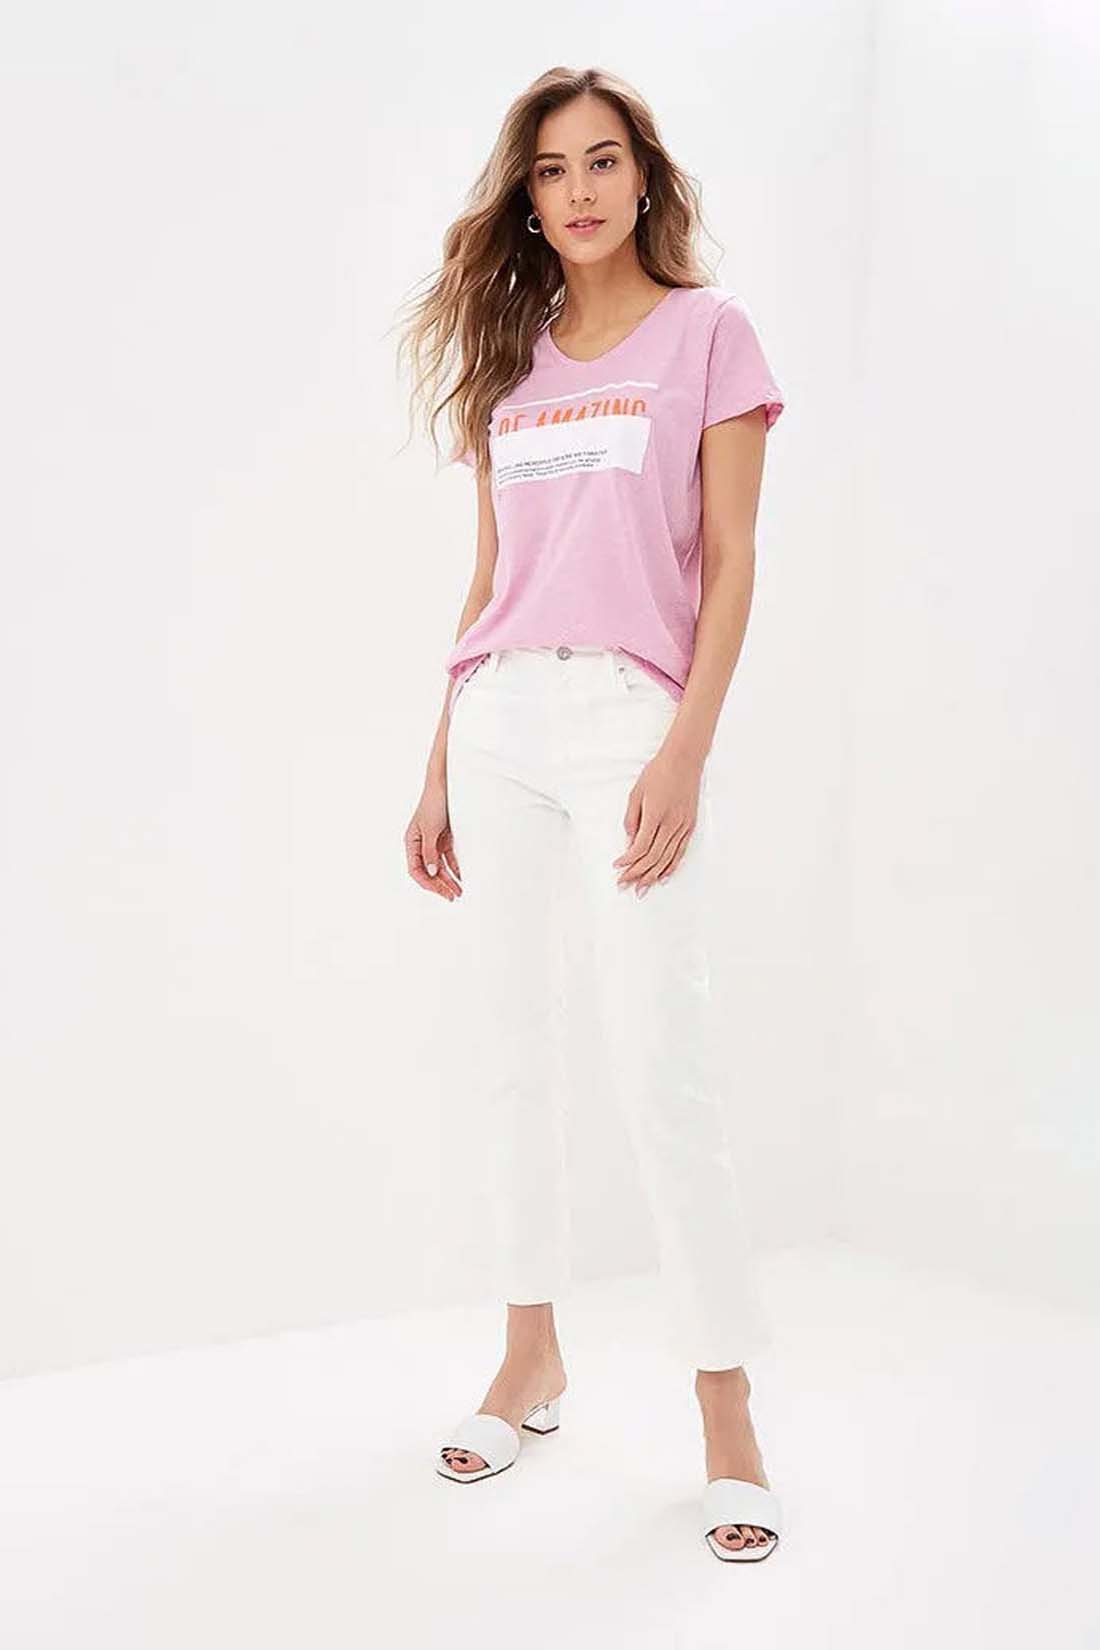 Розовая футболка с принтом (арт. baon B239079), размер L, цвет розовый Розовая футболка с принтом (арт. baon B239079) - фото 3